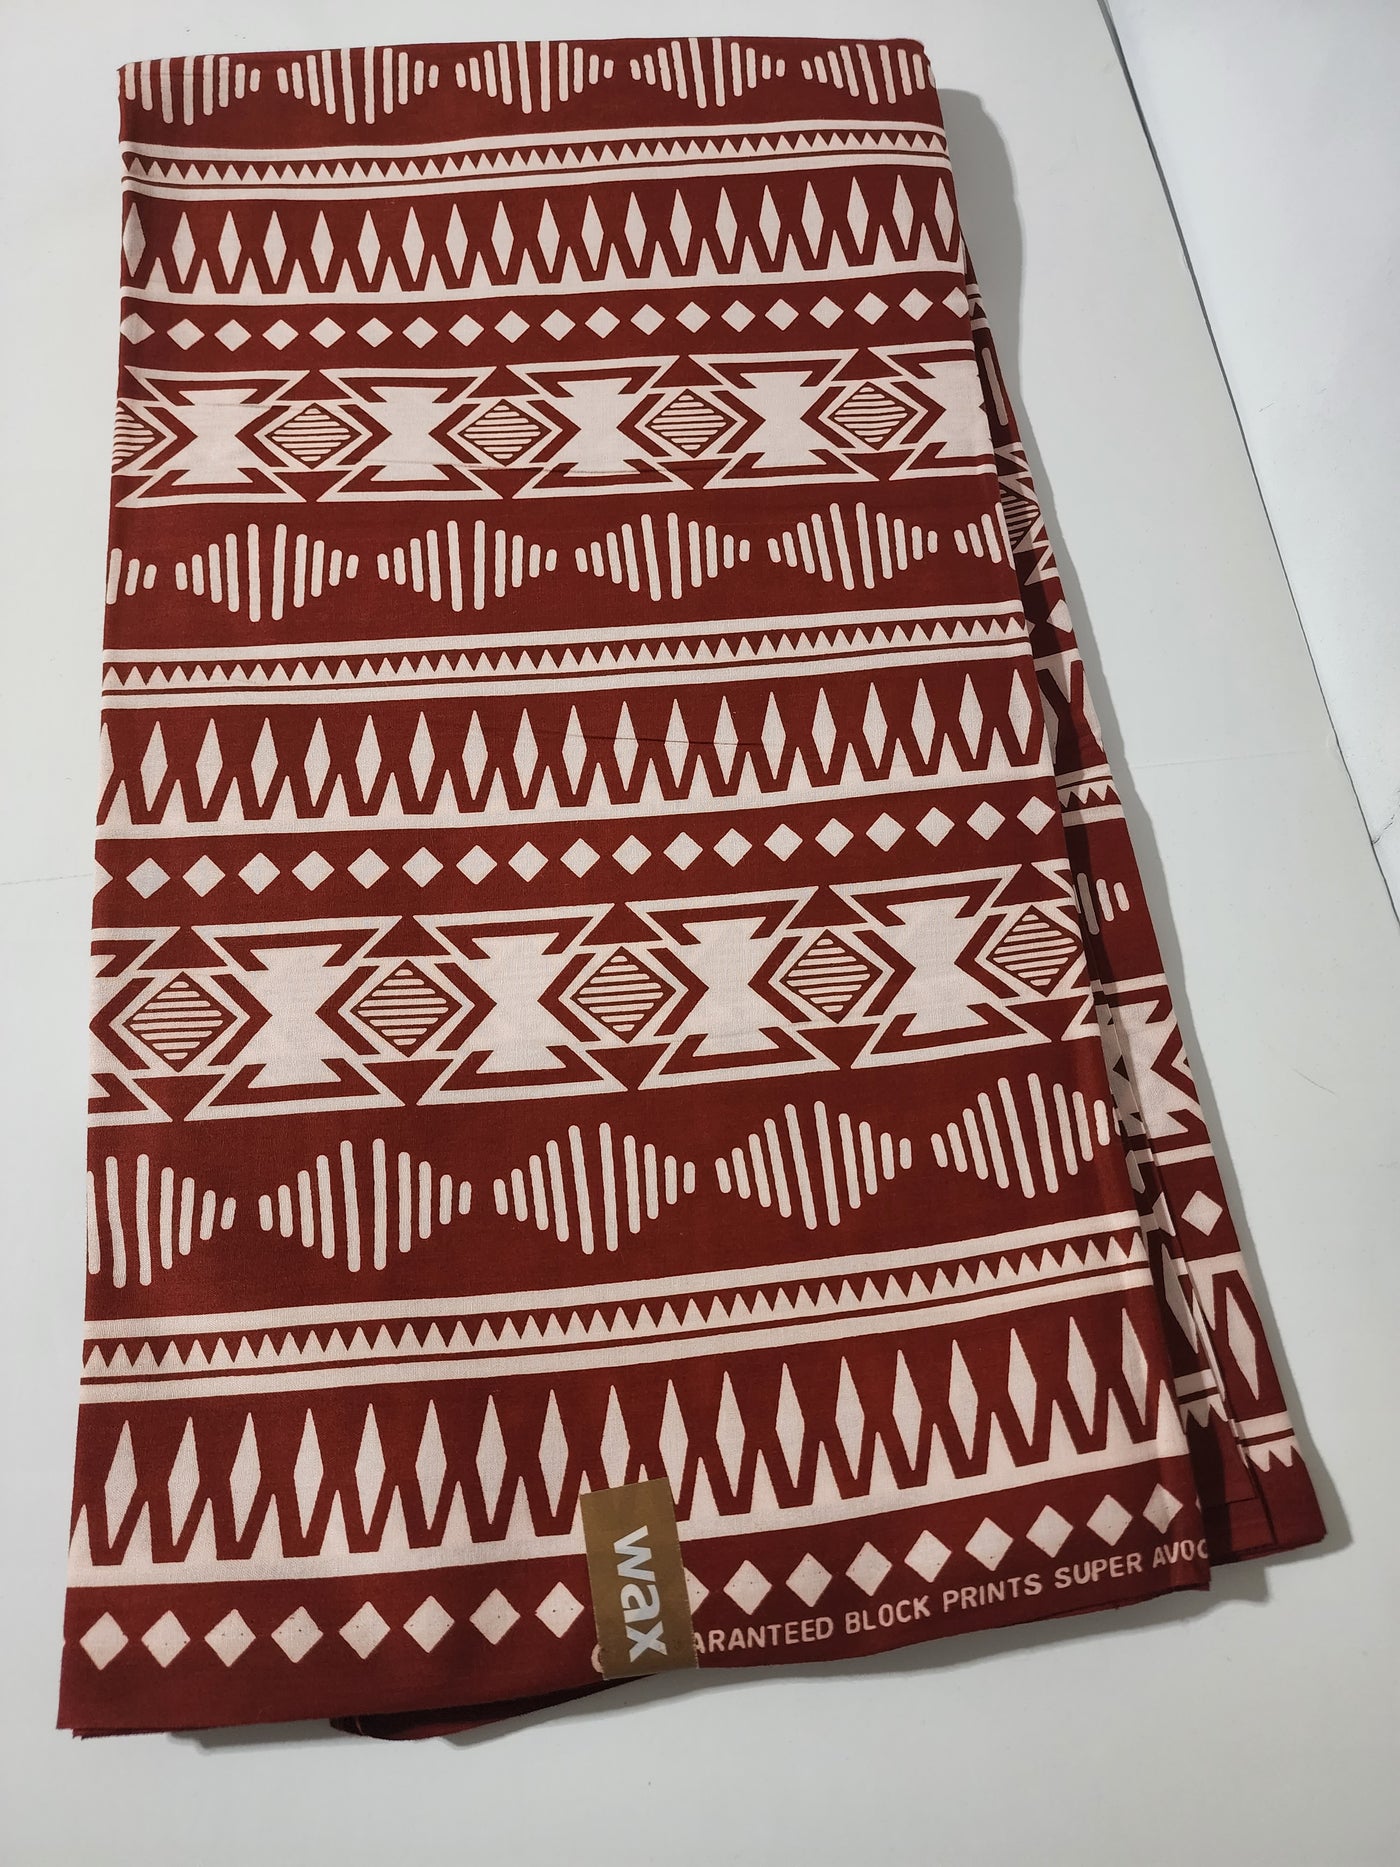 Burnt Orange Ankara Tribal Fabric, ACS0123